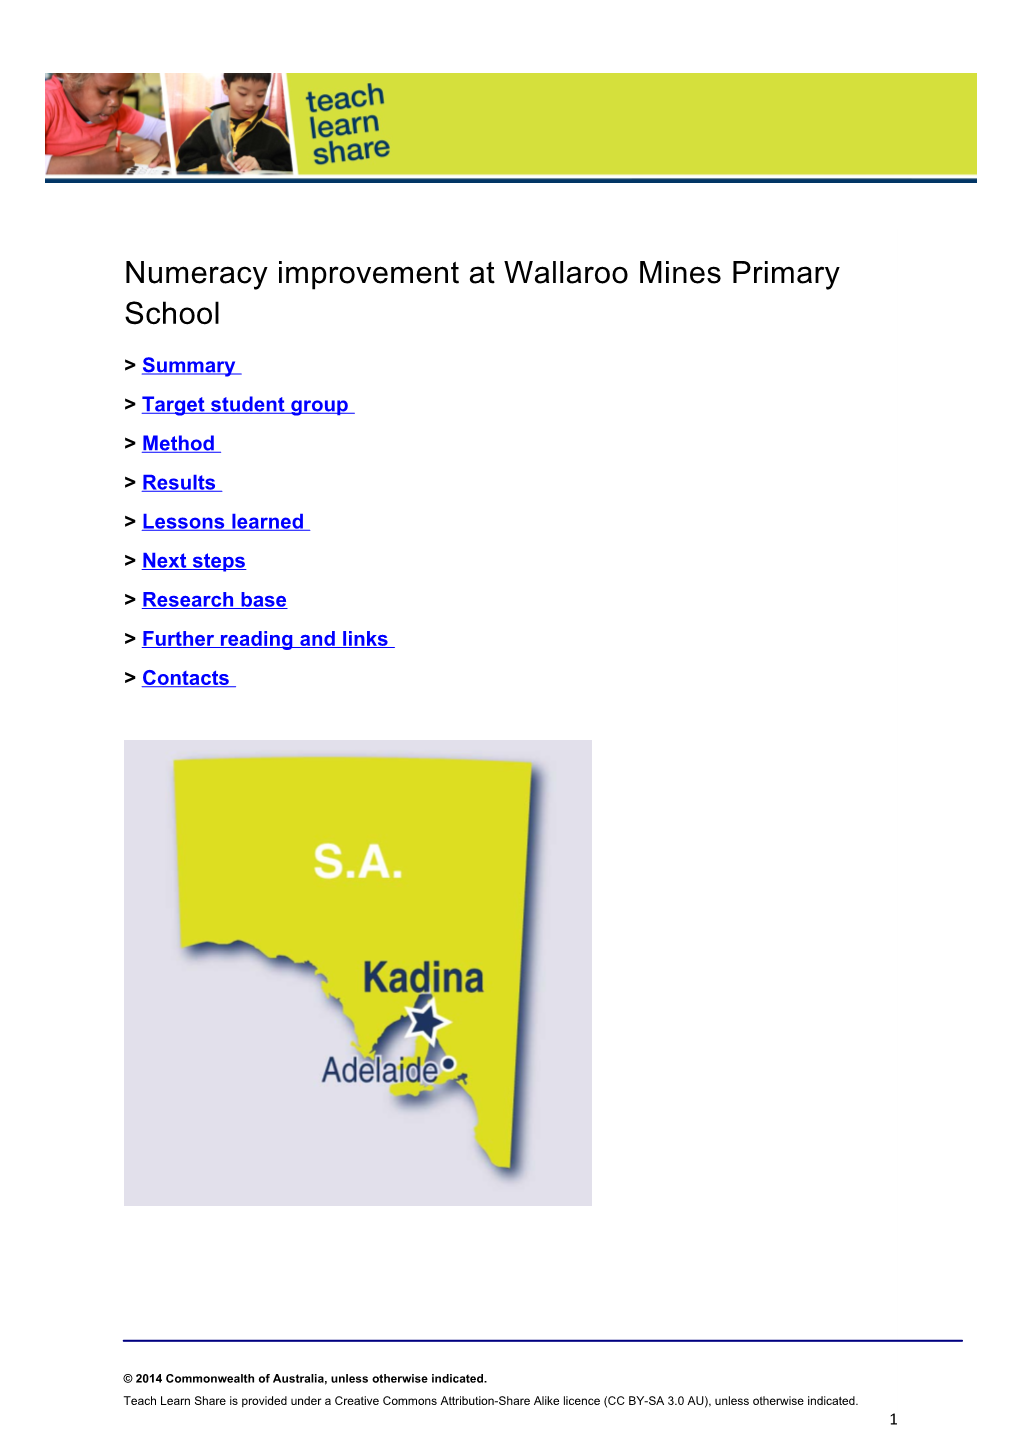 Numeracy Improvement at Wallaroo Mines Primary School